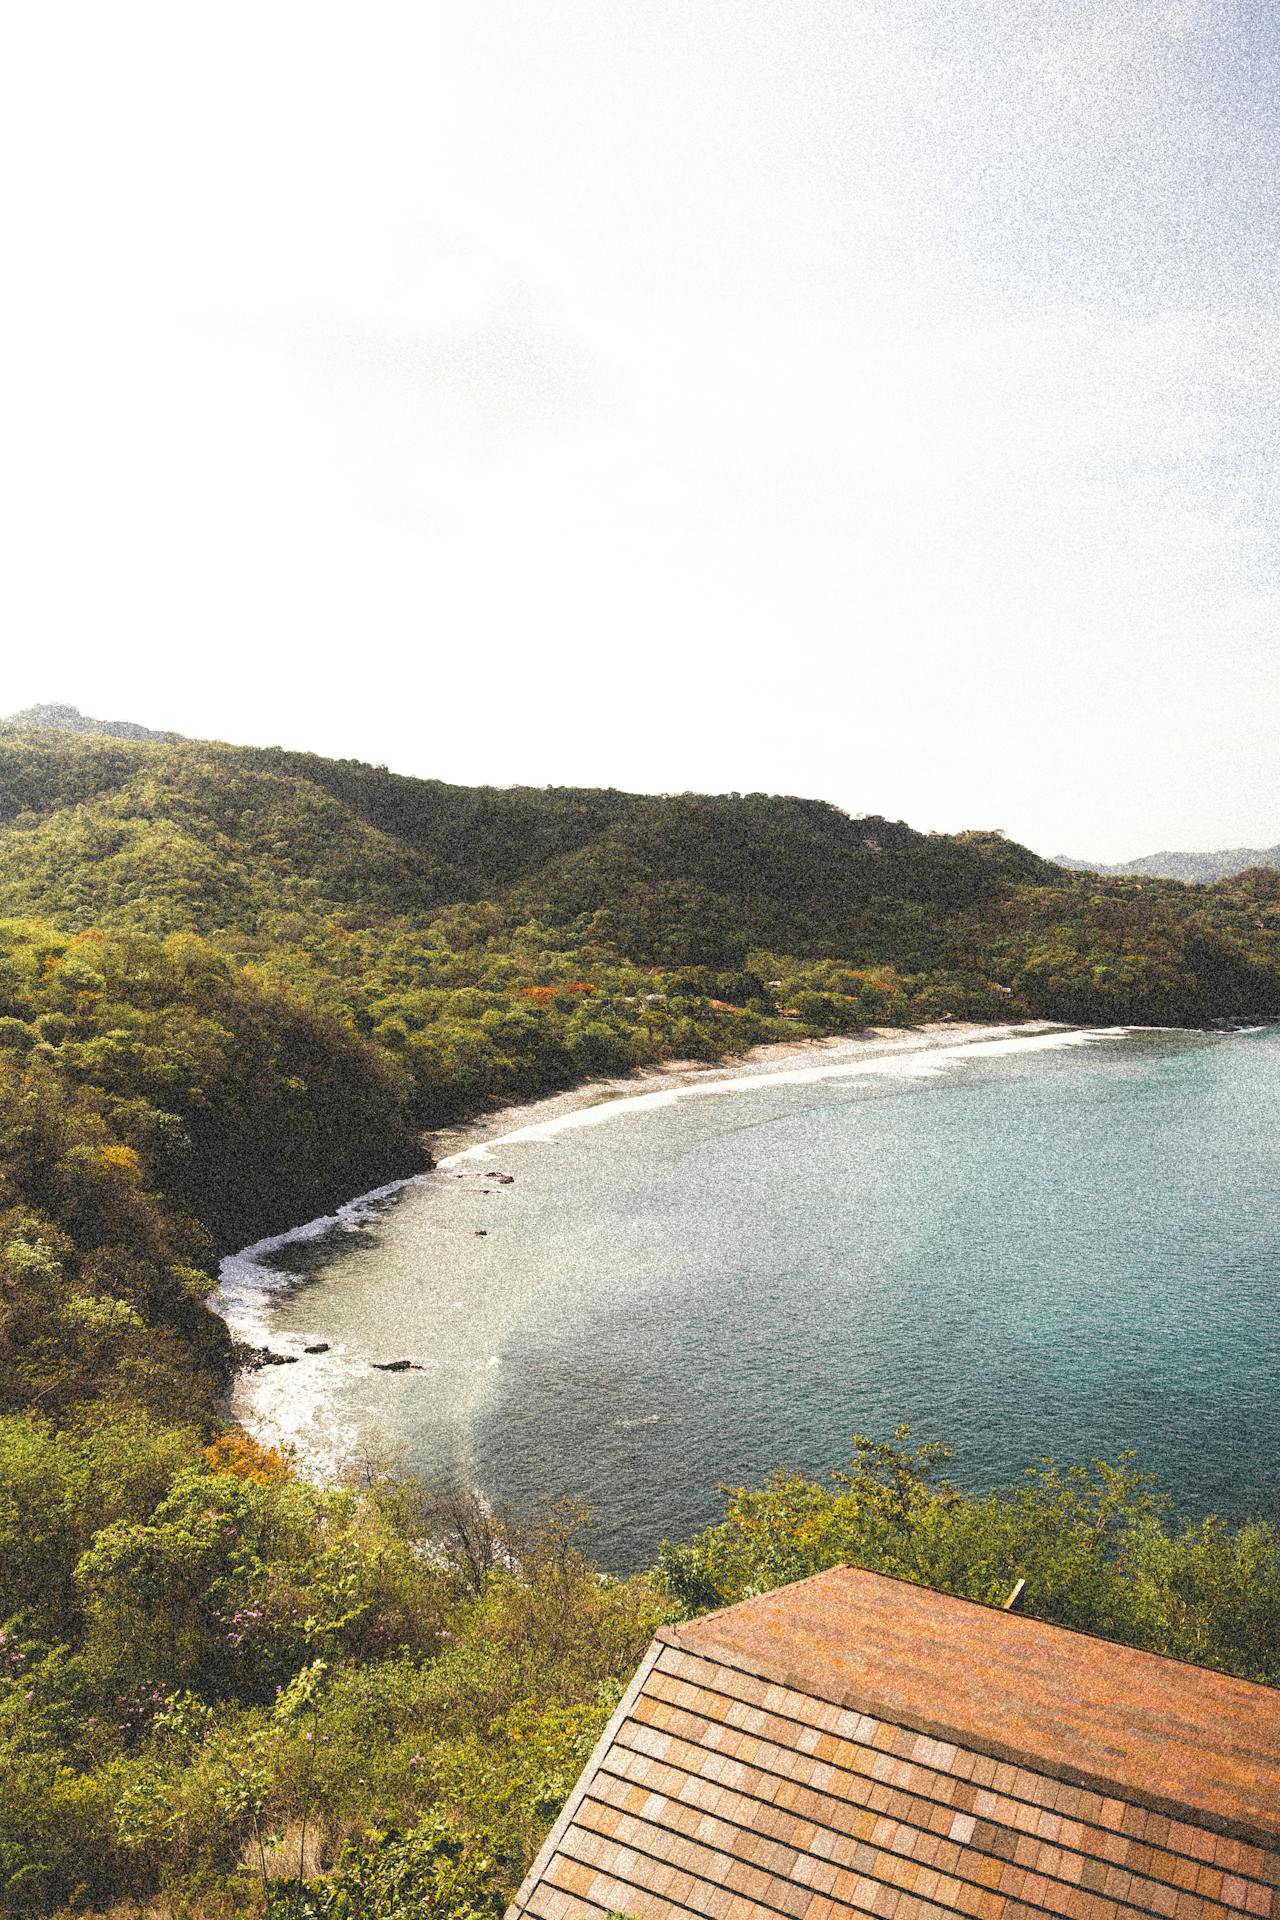 Ocean bay in Costa Rica